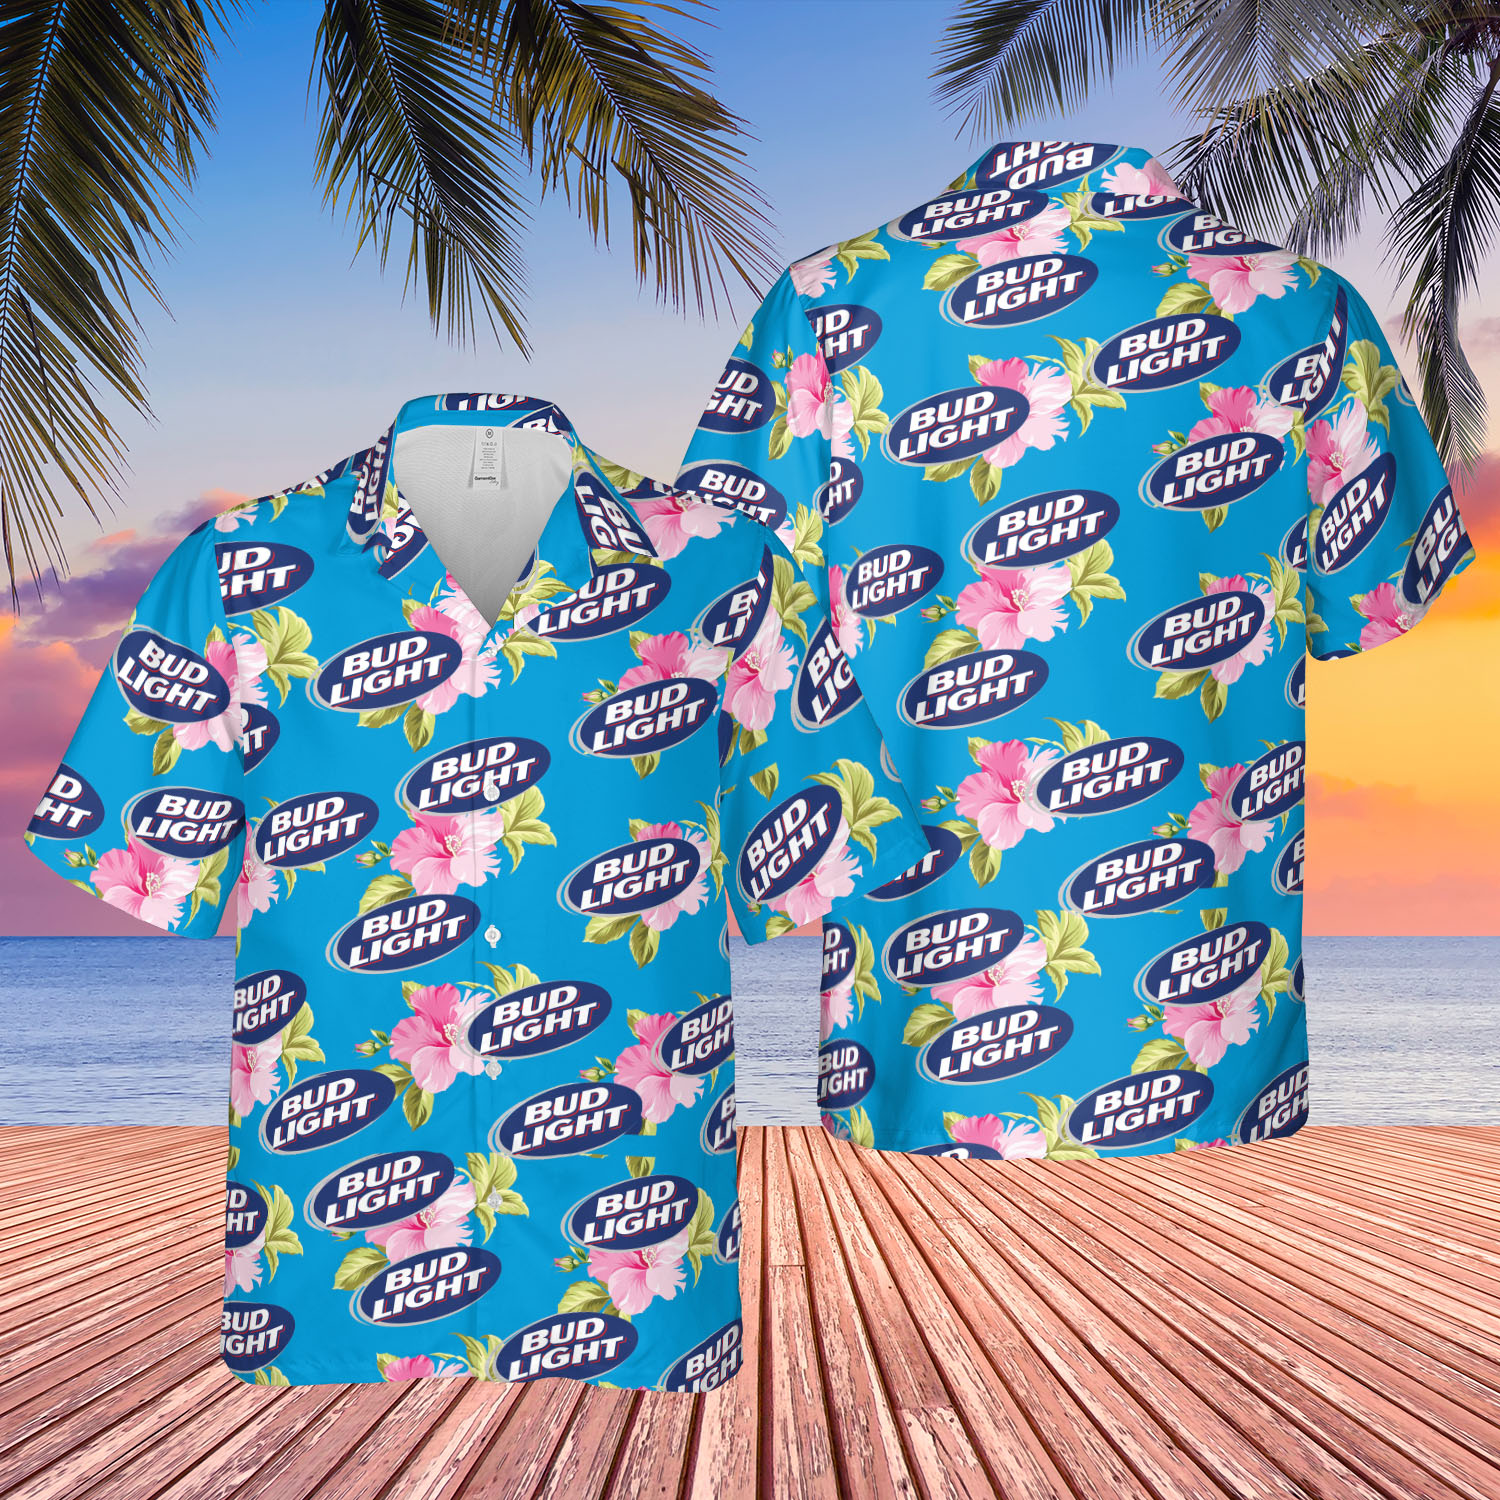 Bud light hawaiian shirt - Endastore.com